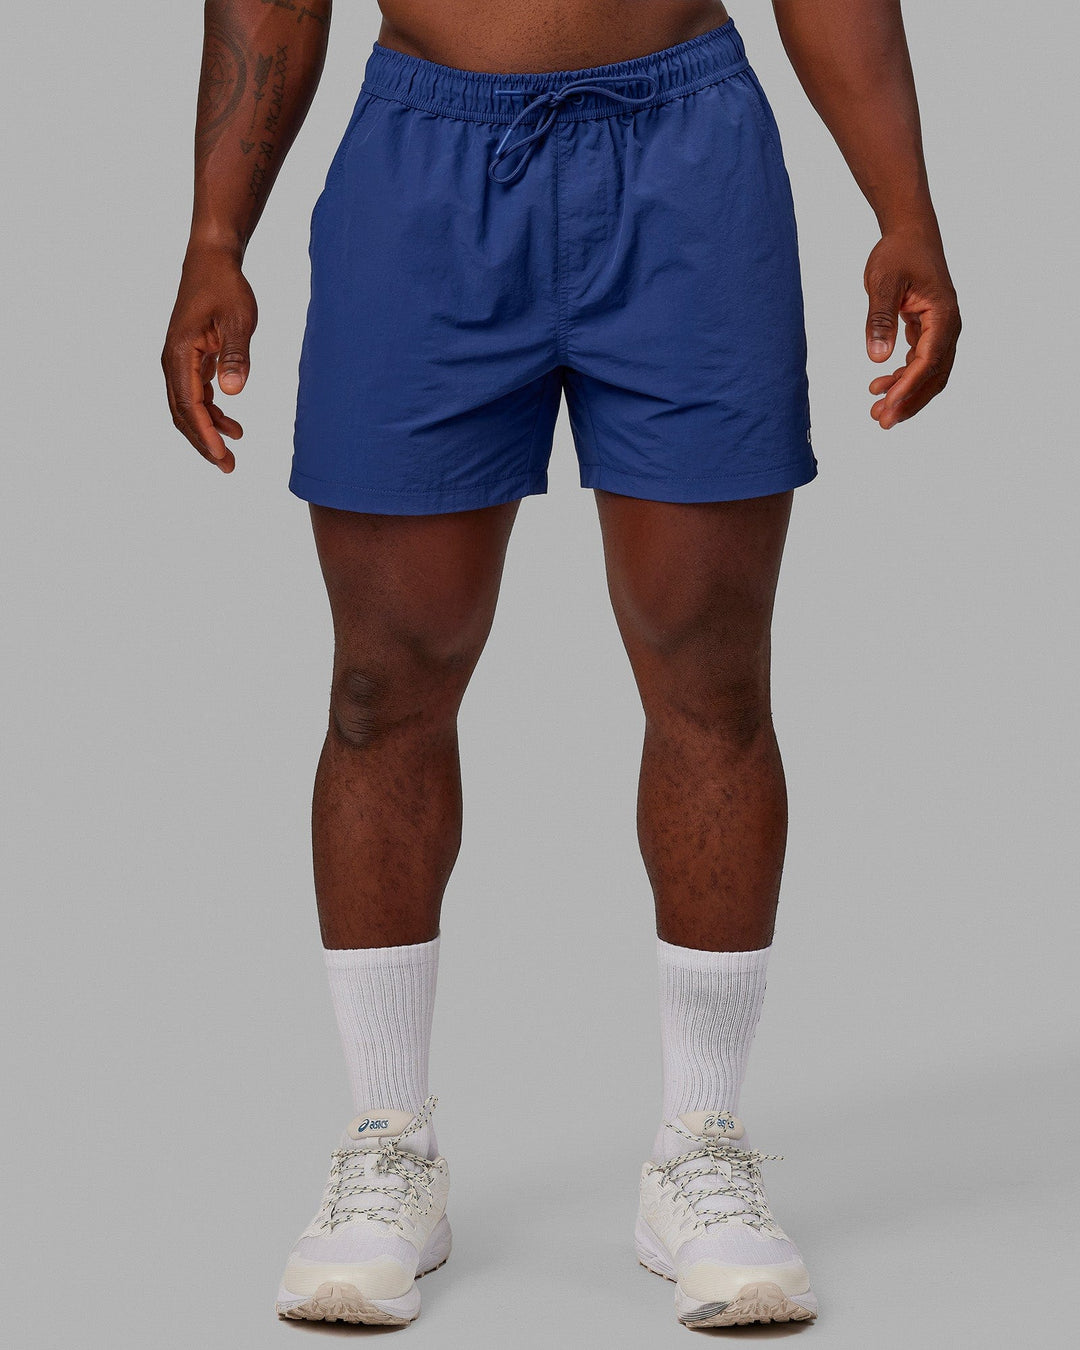 Man wearing Classic 5" Shorts - Galactic Cobalt